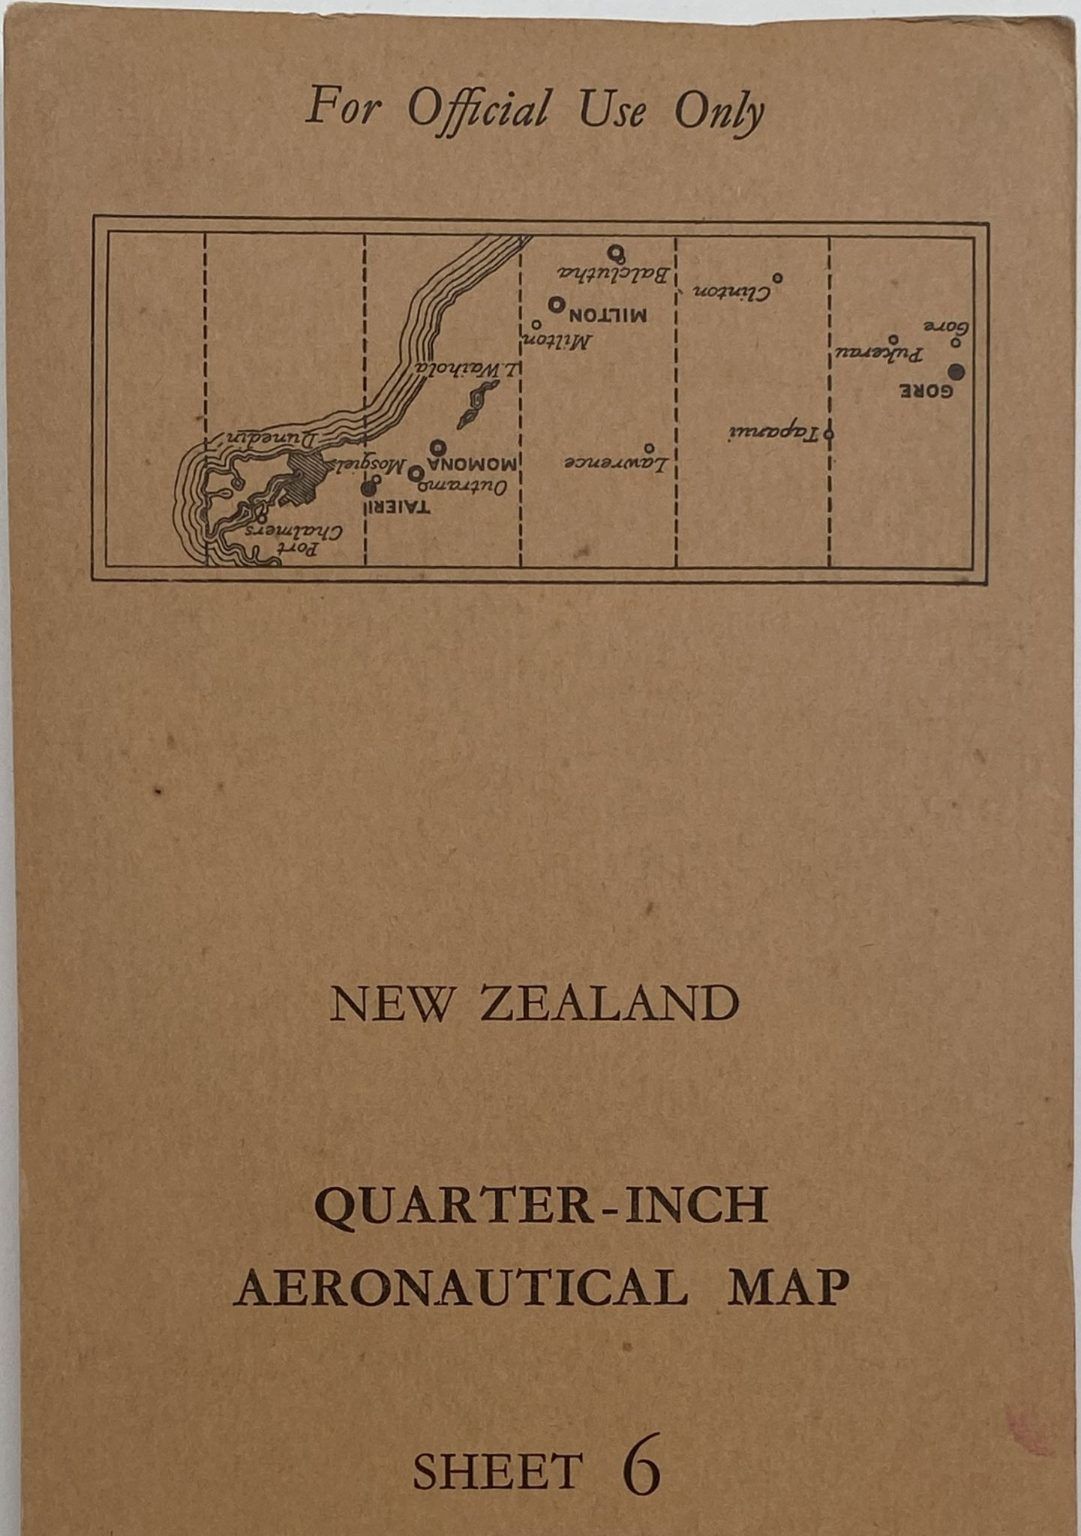 VINTAGE AERONAUTICAL CHART: Flying Map, Sheet No. 6, Dunedin 1942